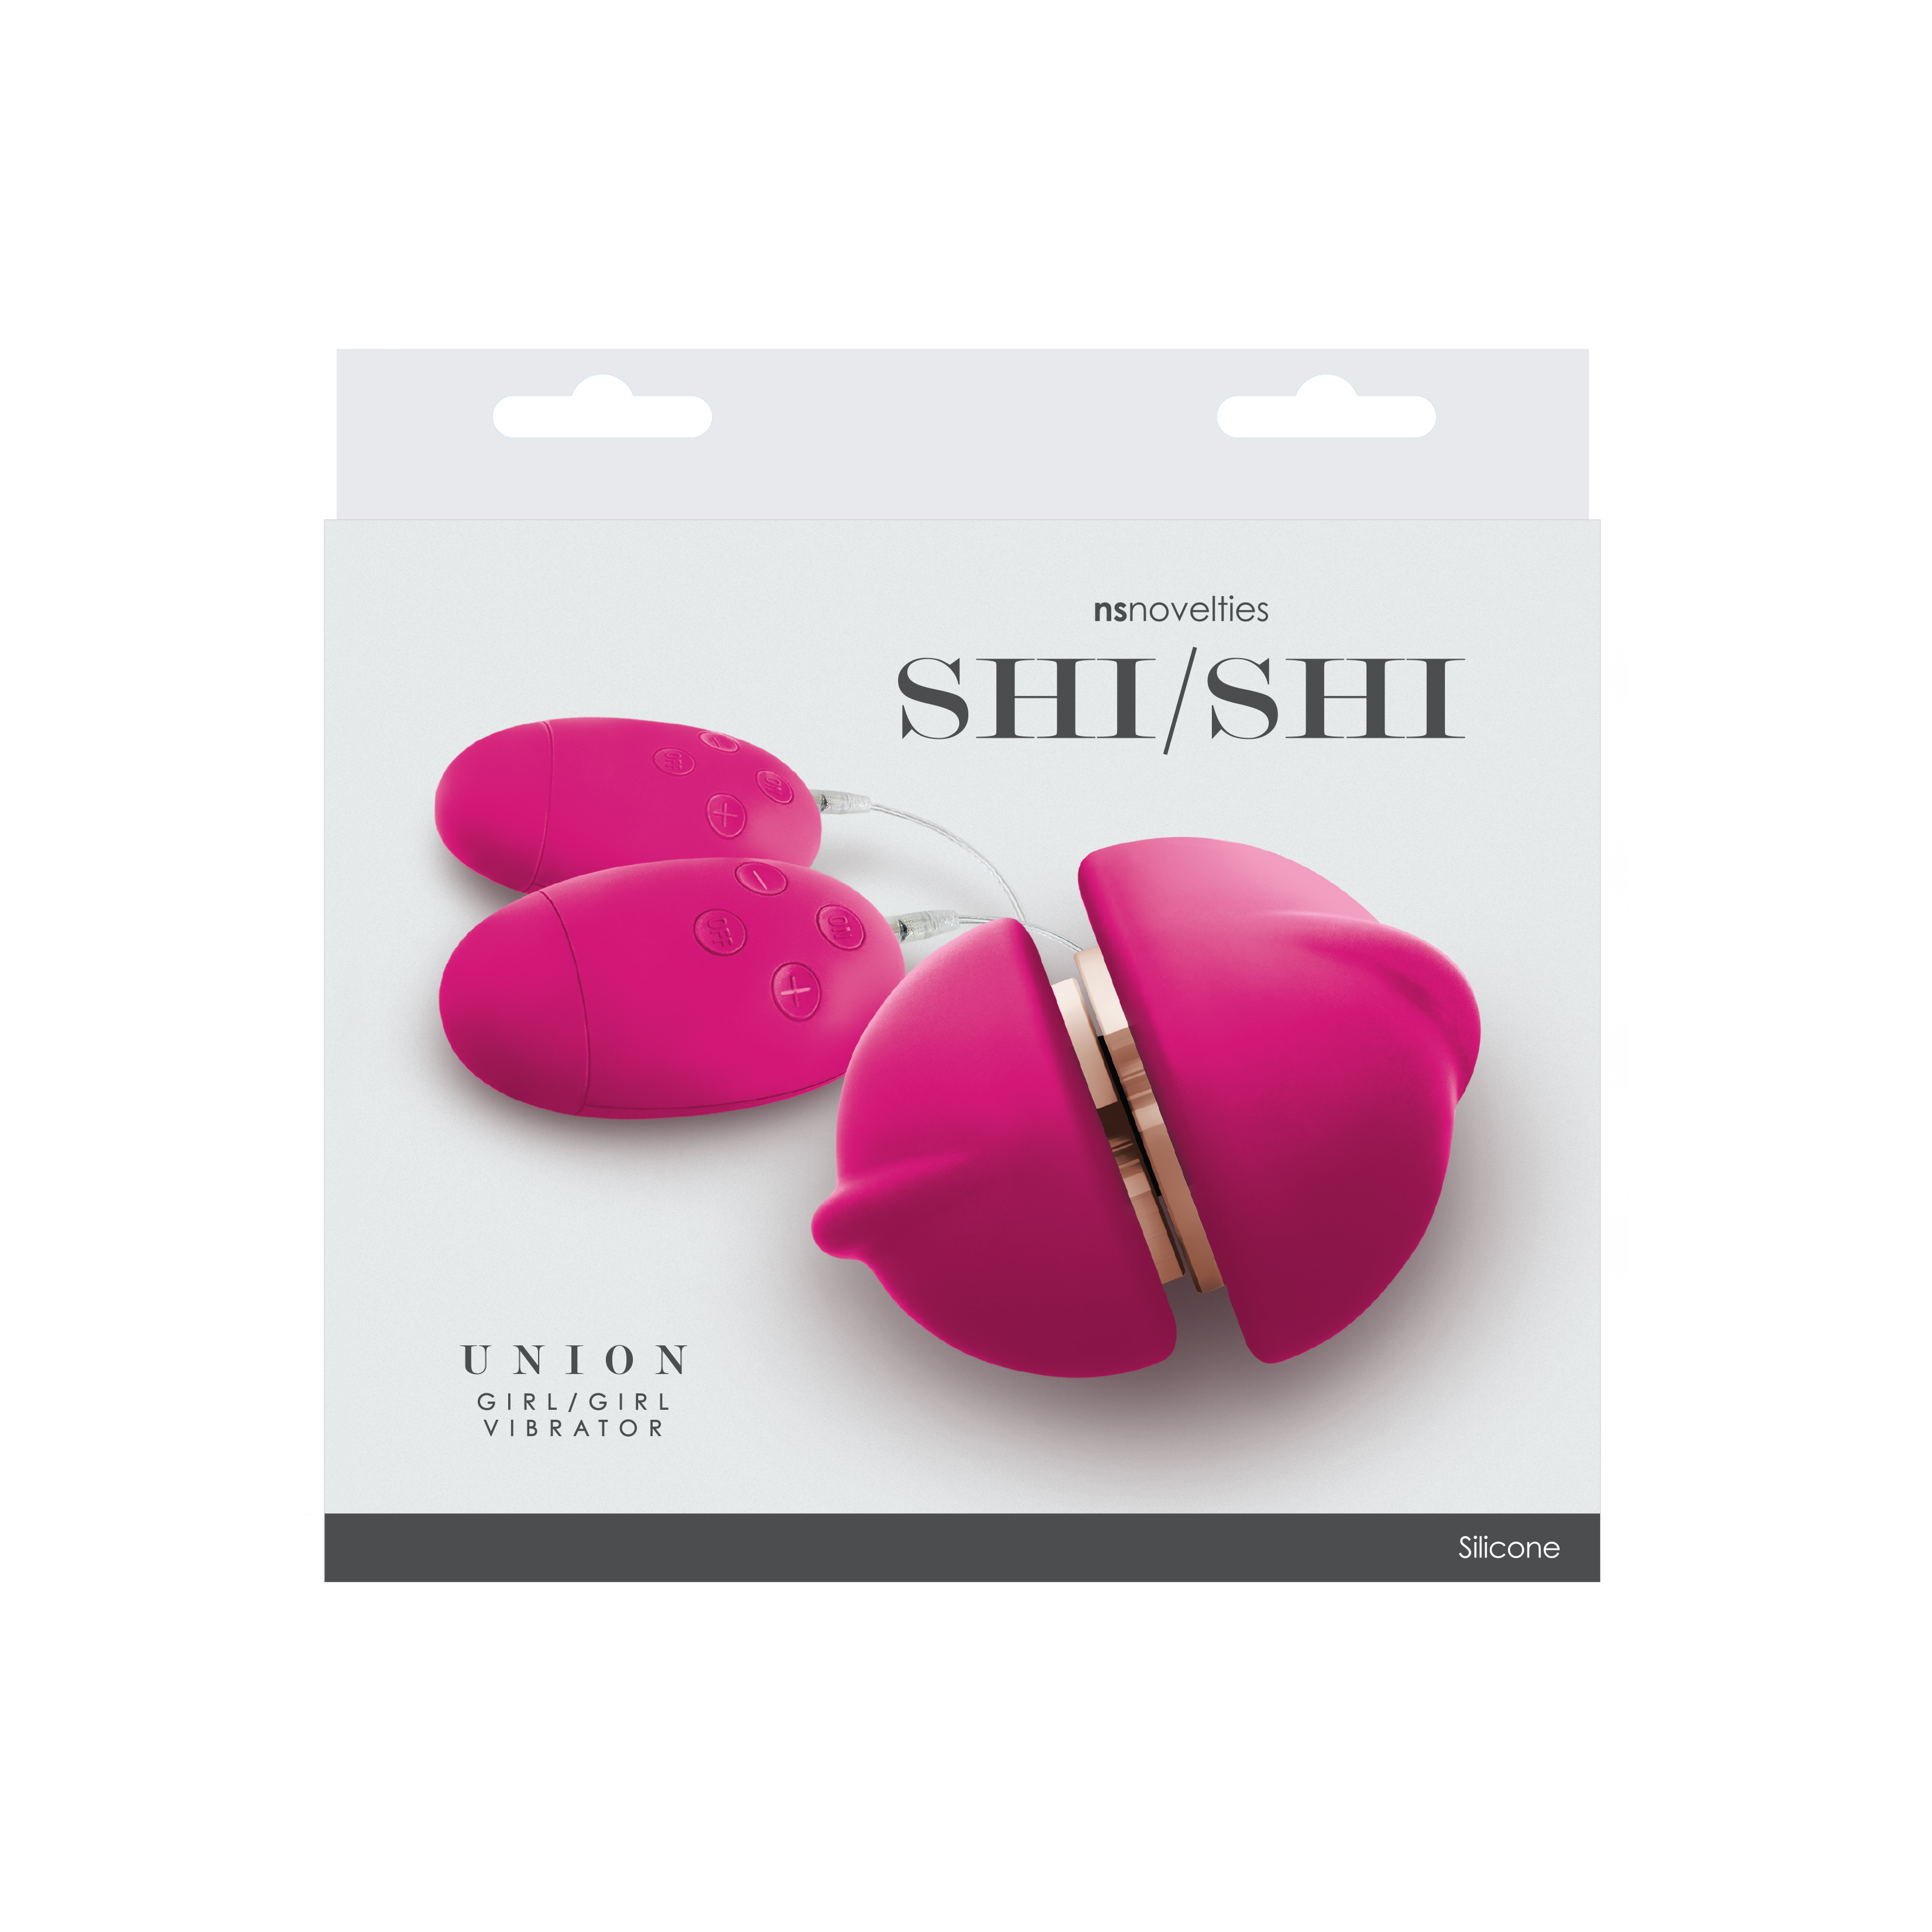 Shi/ Shi - Union - Girl/ Girl Vibe - Pink